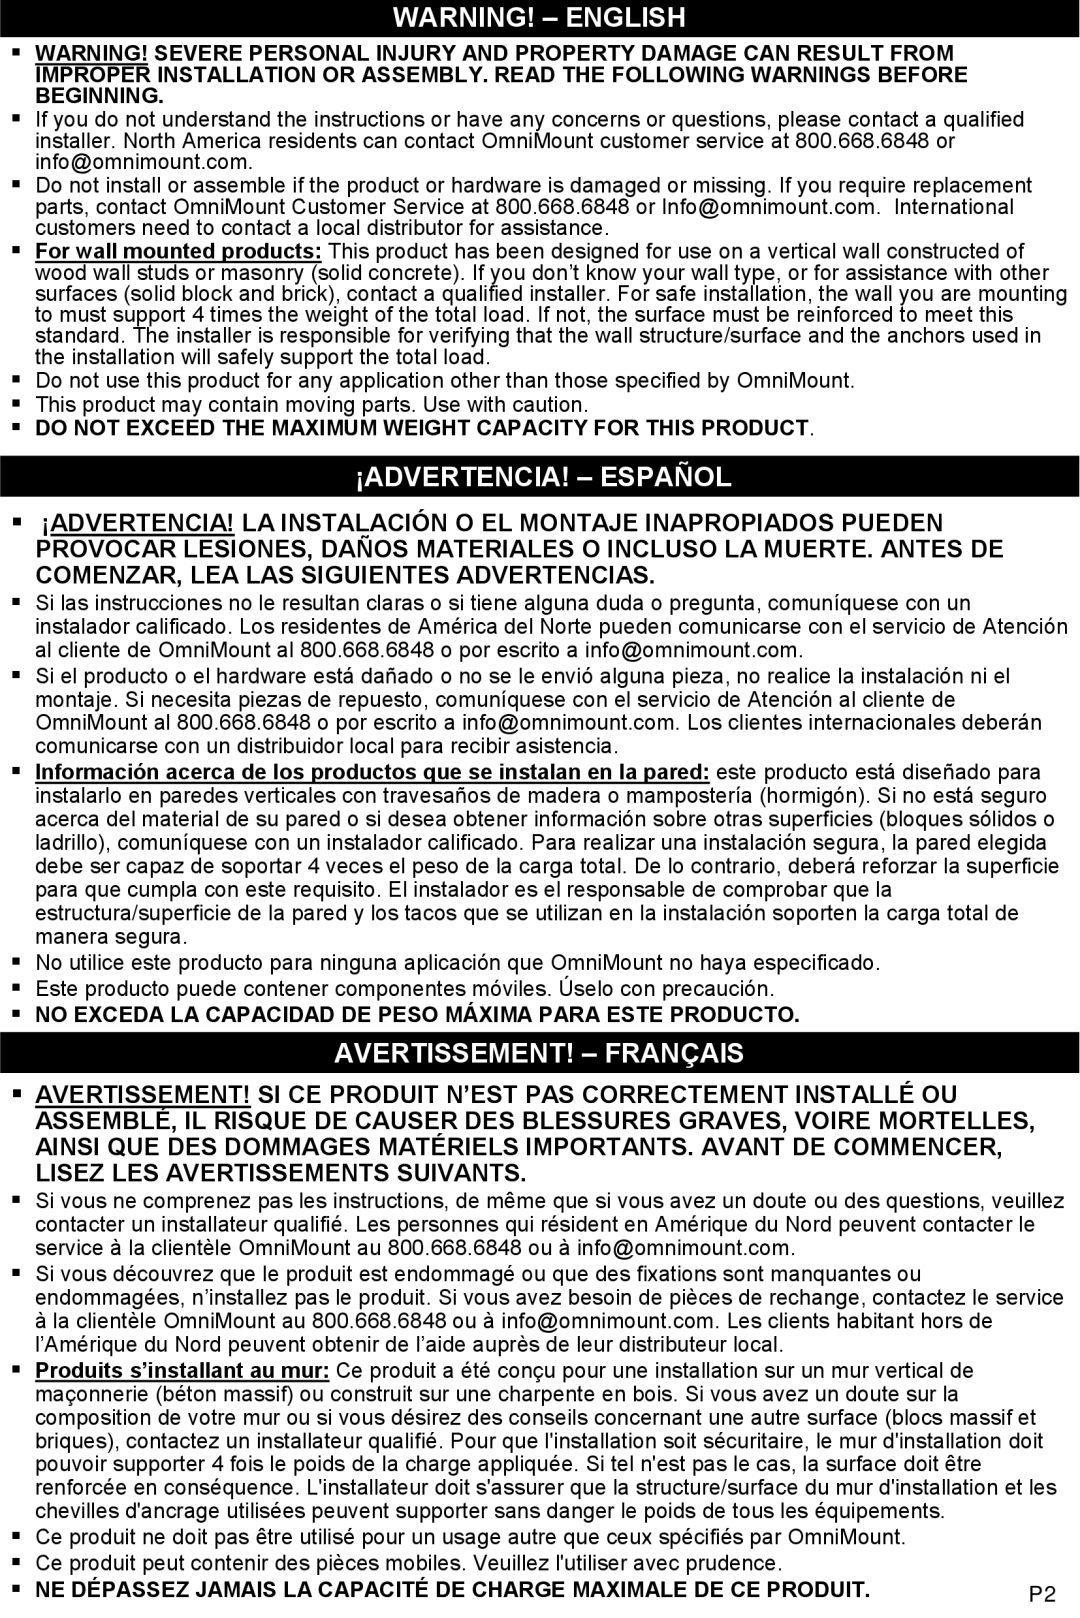 Omnimount MWF8, UL10188 instruction manual Warning! - English, ¡Advertencia! - Español, Avertissement! - Français 